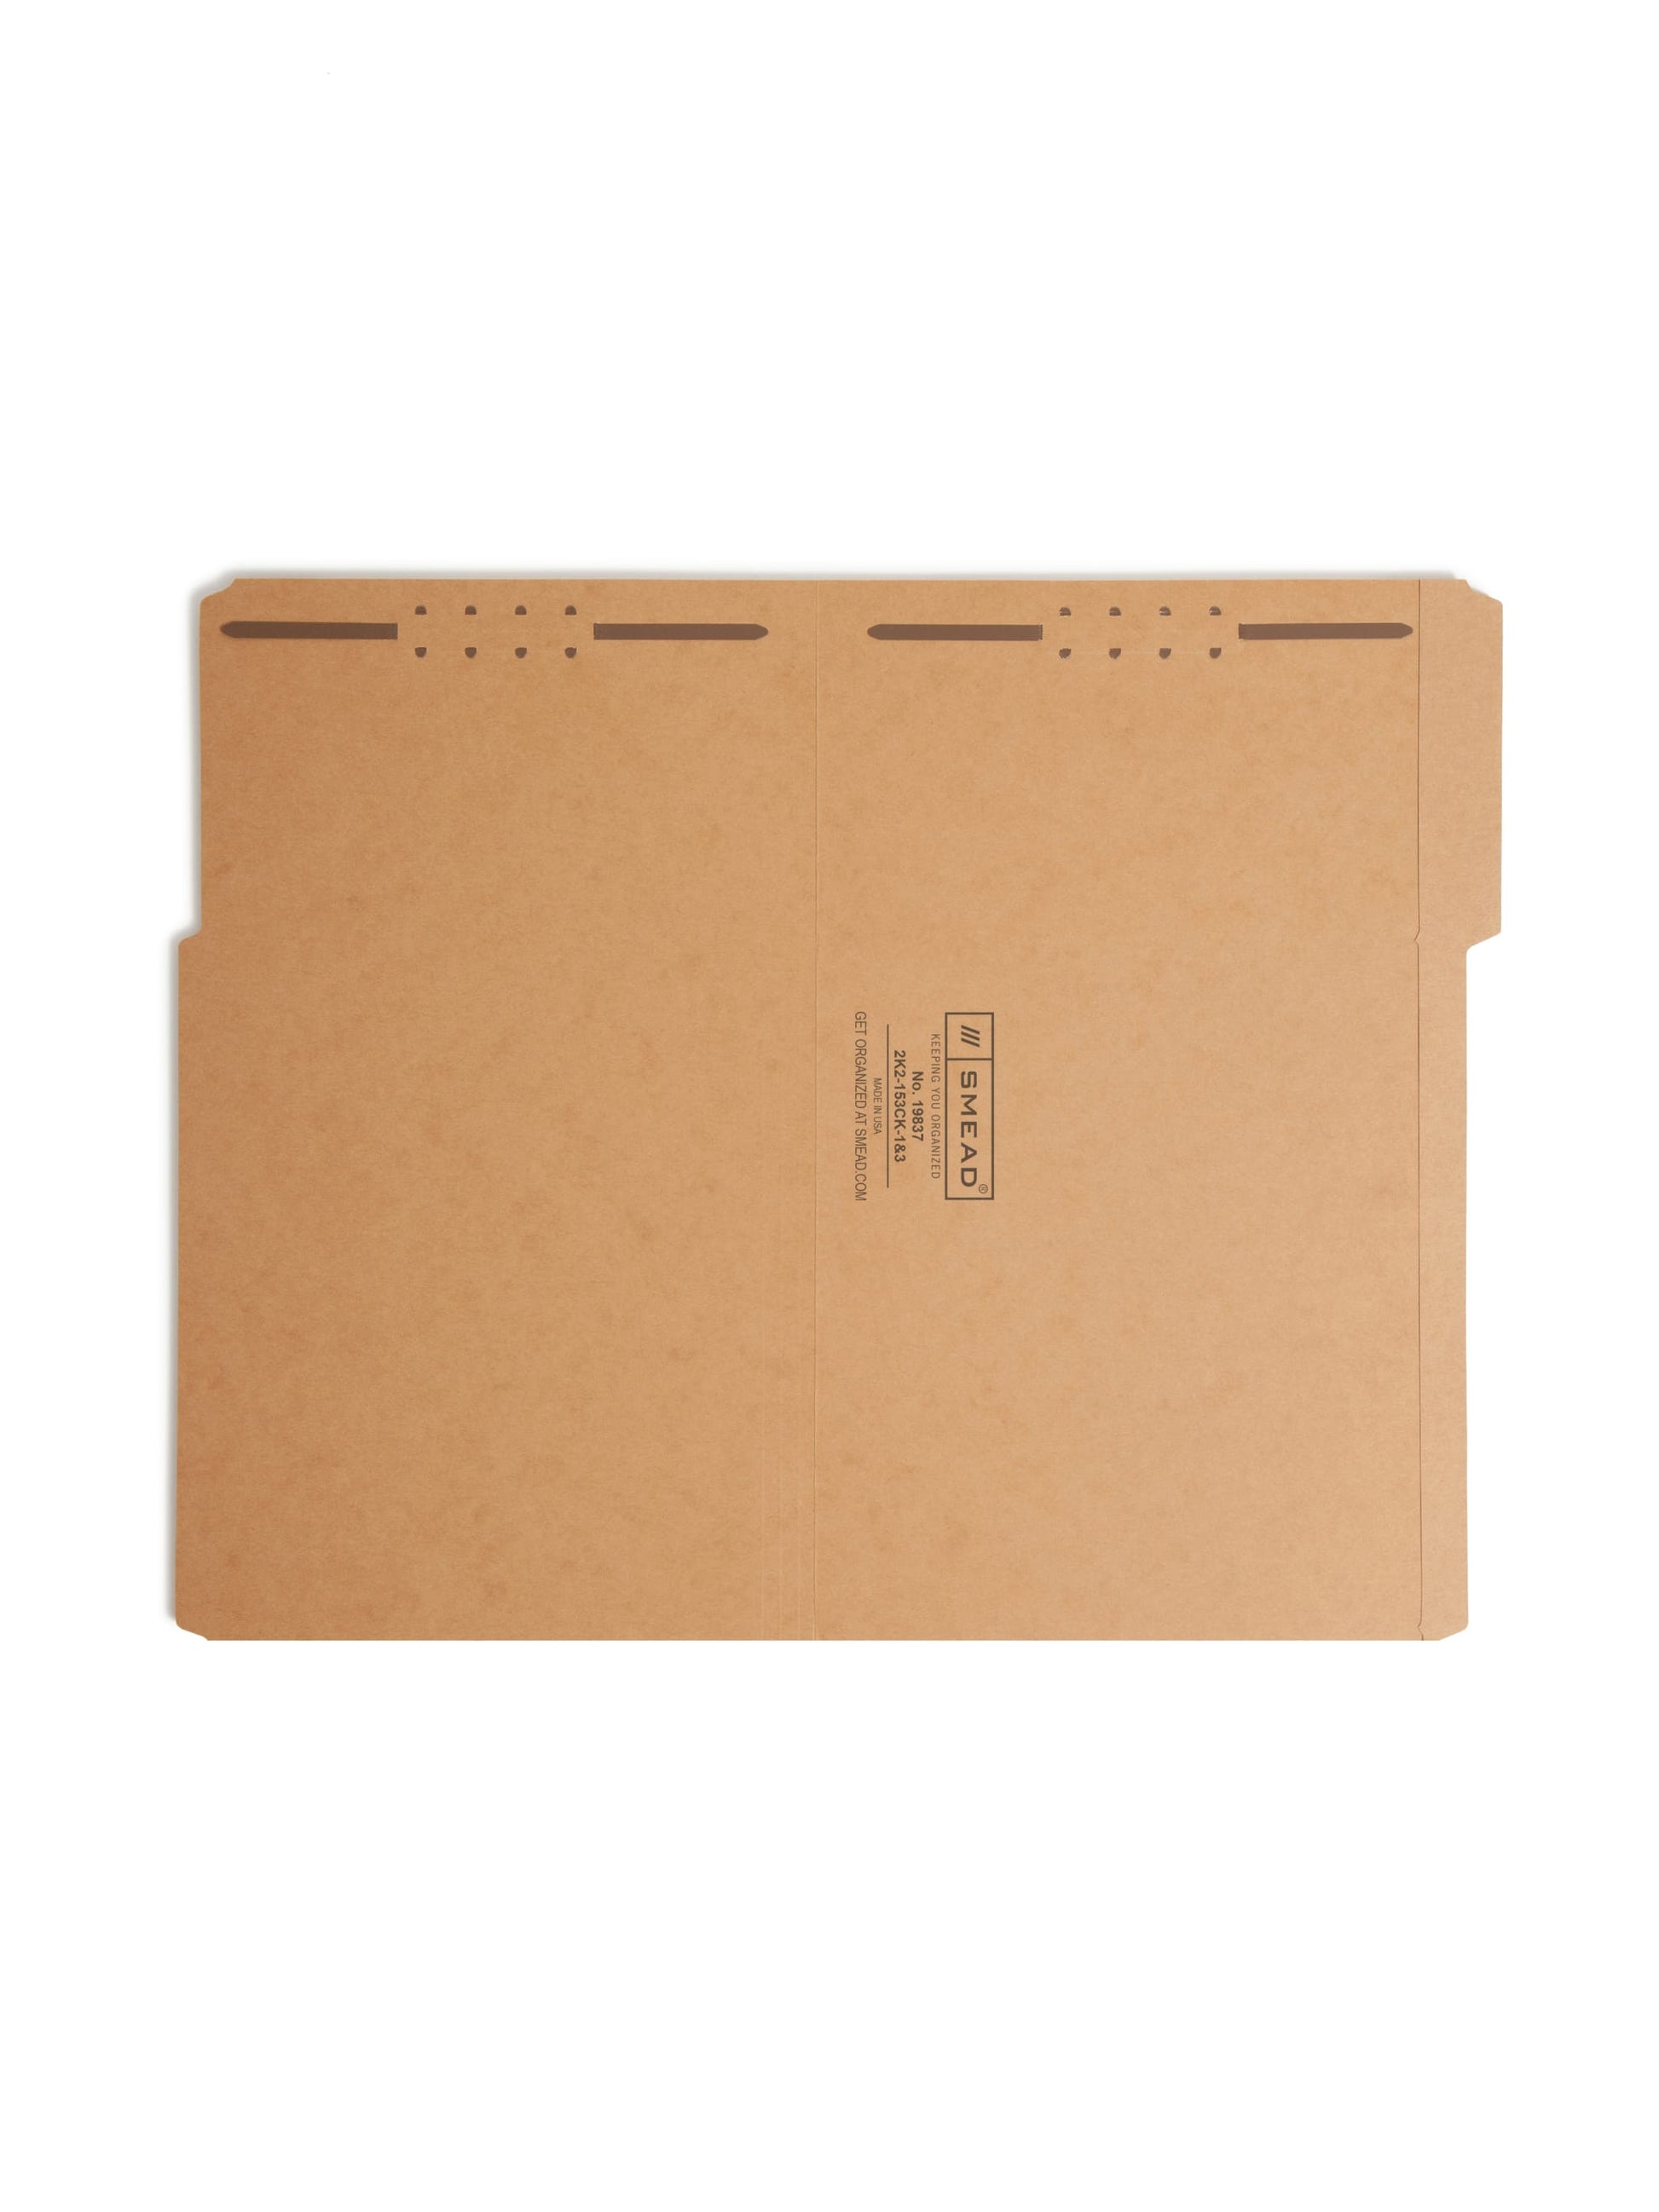 Reinforced Tab Fastener File Folders, 1/3-Cut Tab, 2 Fasteners, Kraft Color, Legal Size, Set of 50, 086486198370